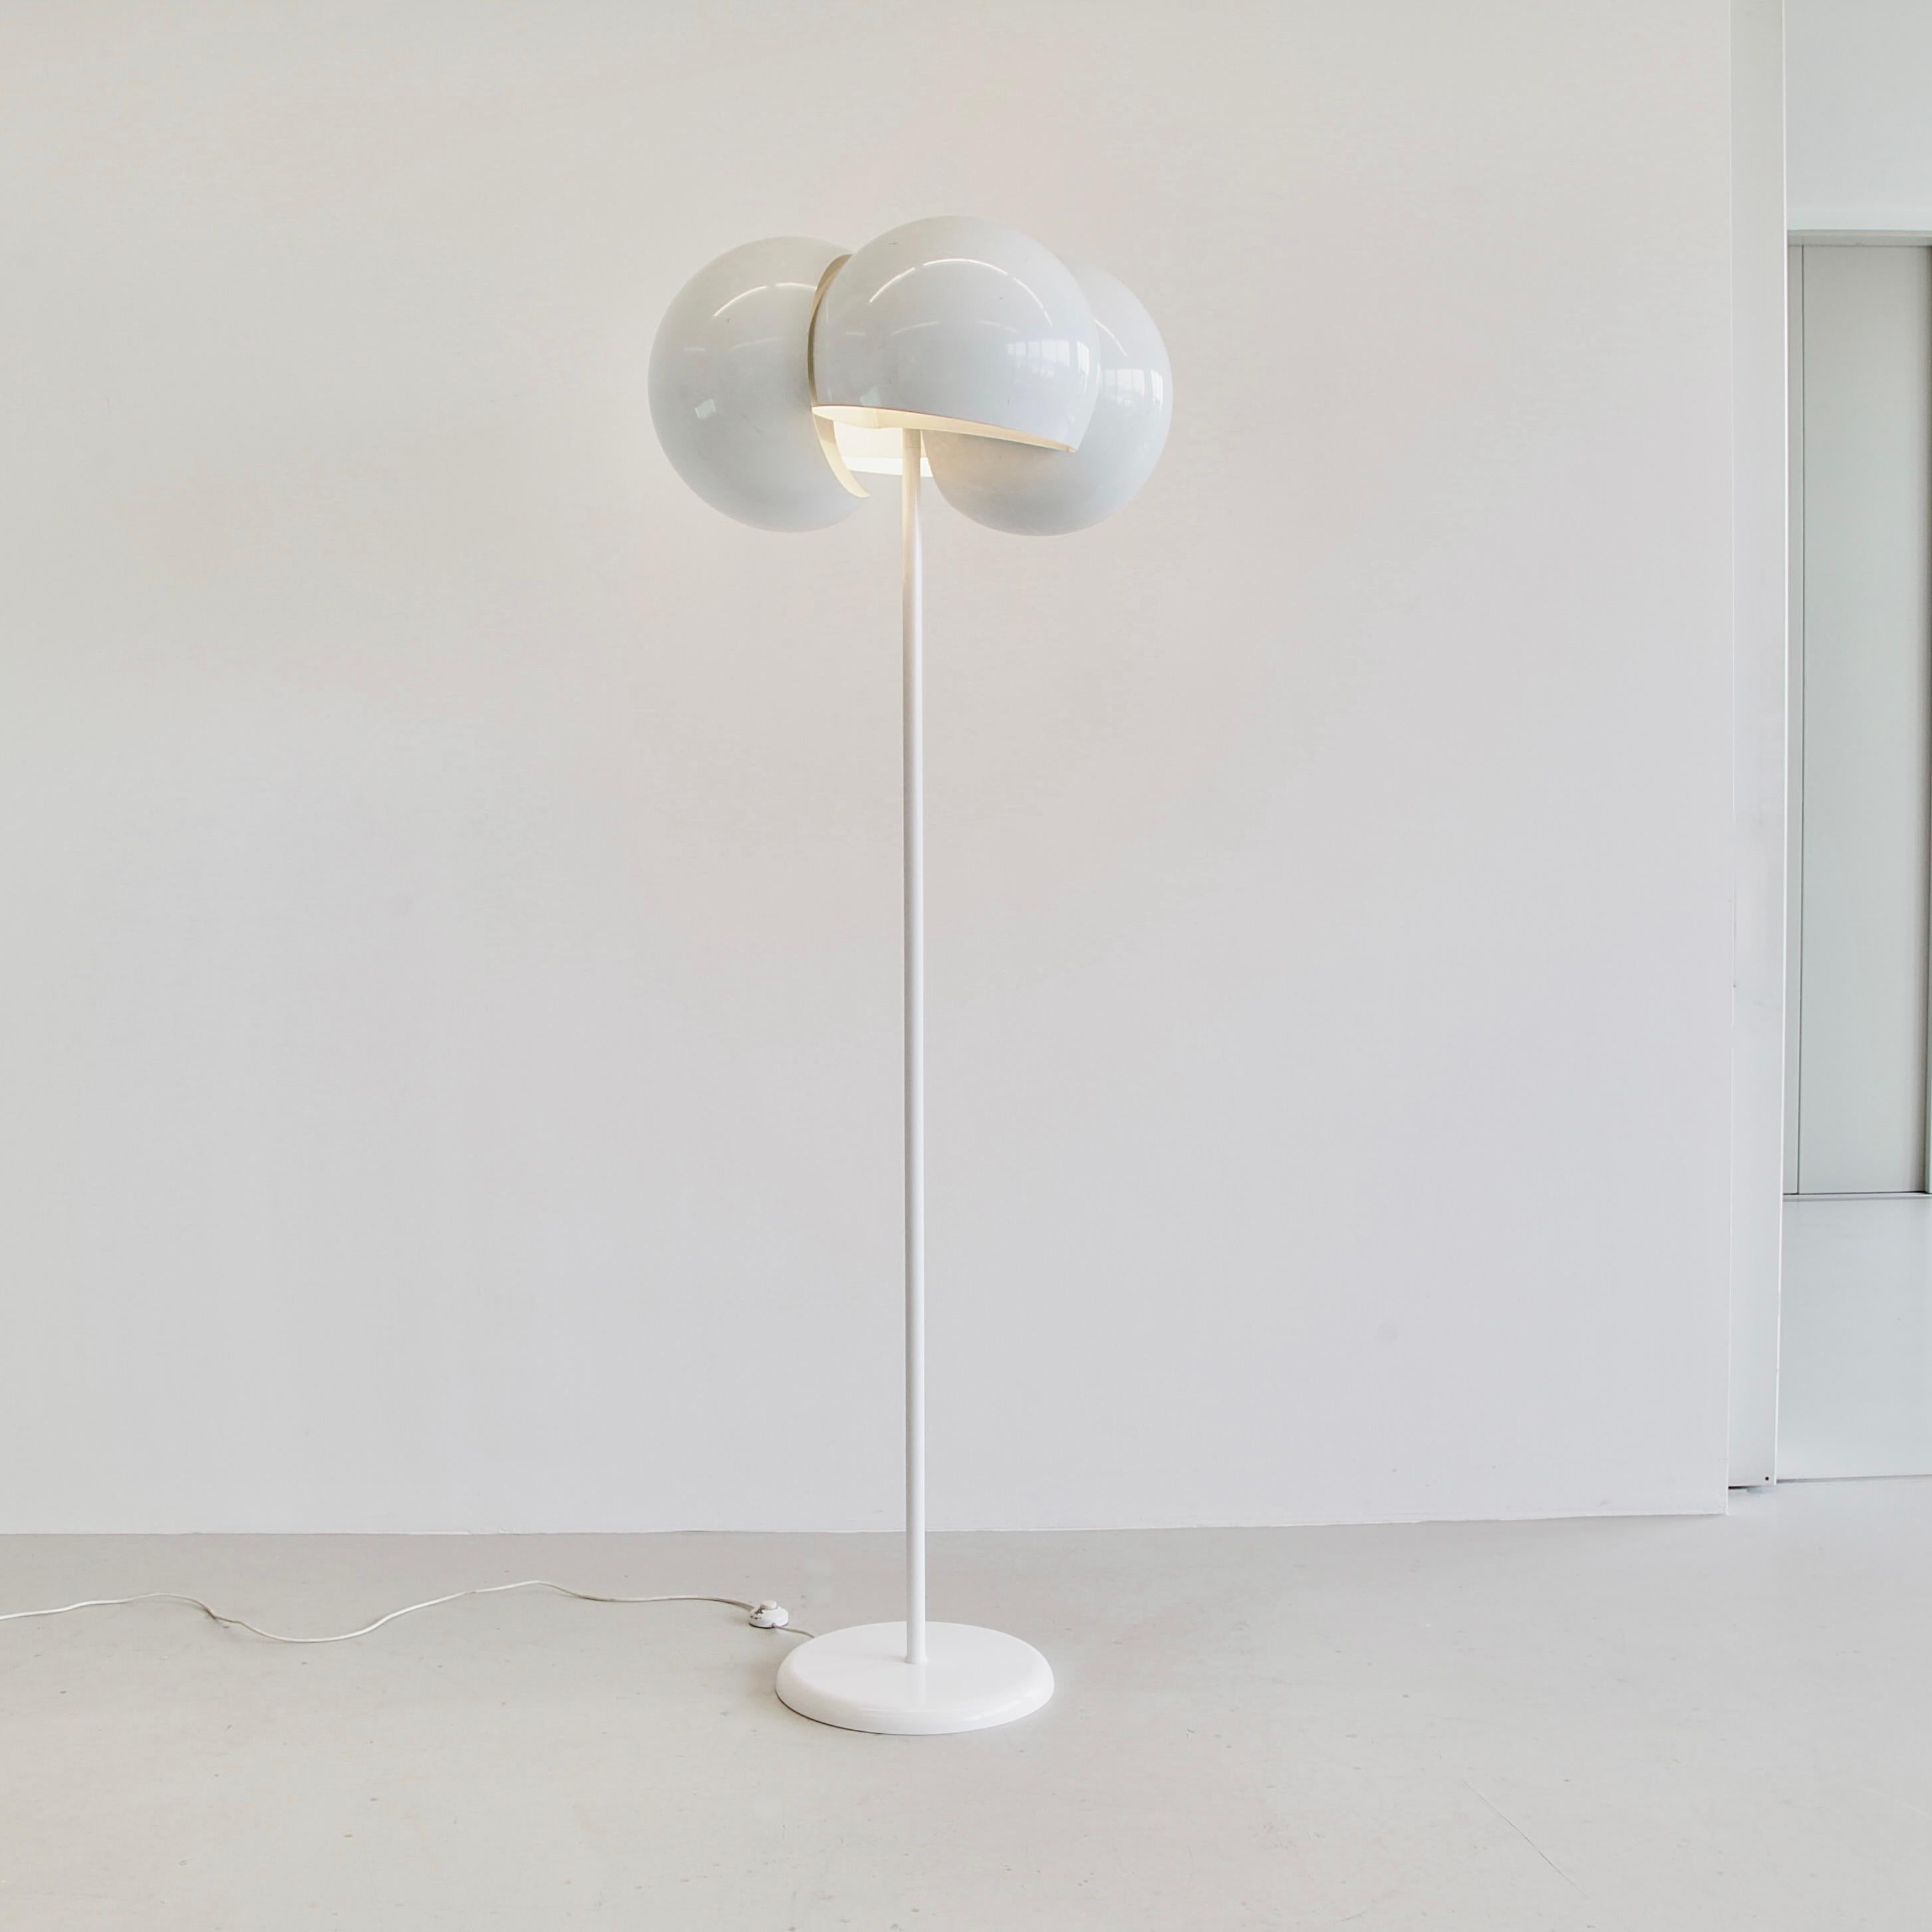 GIUNONE Floor Lamp designed by Vico MAGISTRETTI for Artemide, 1970 In Good Condition For Sale In Berlin, Berlin